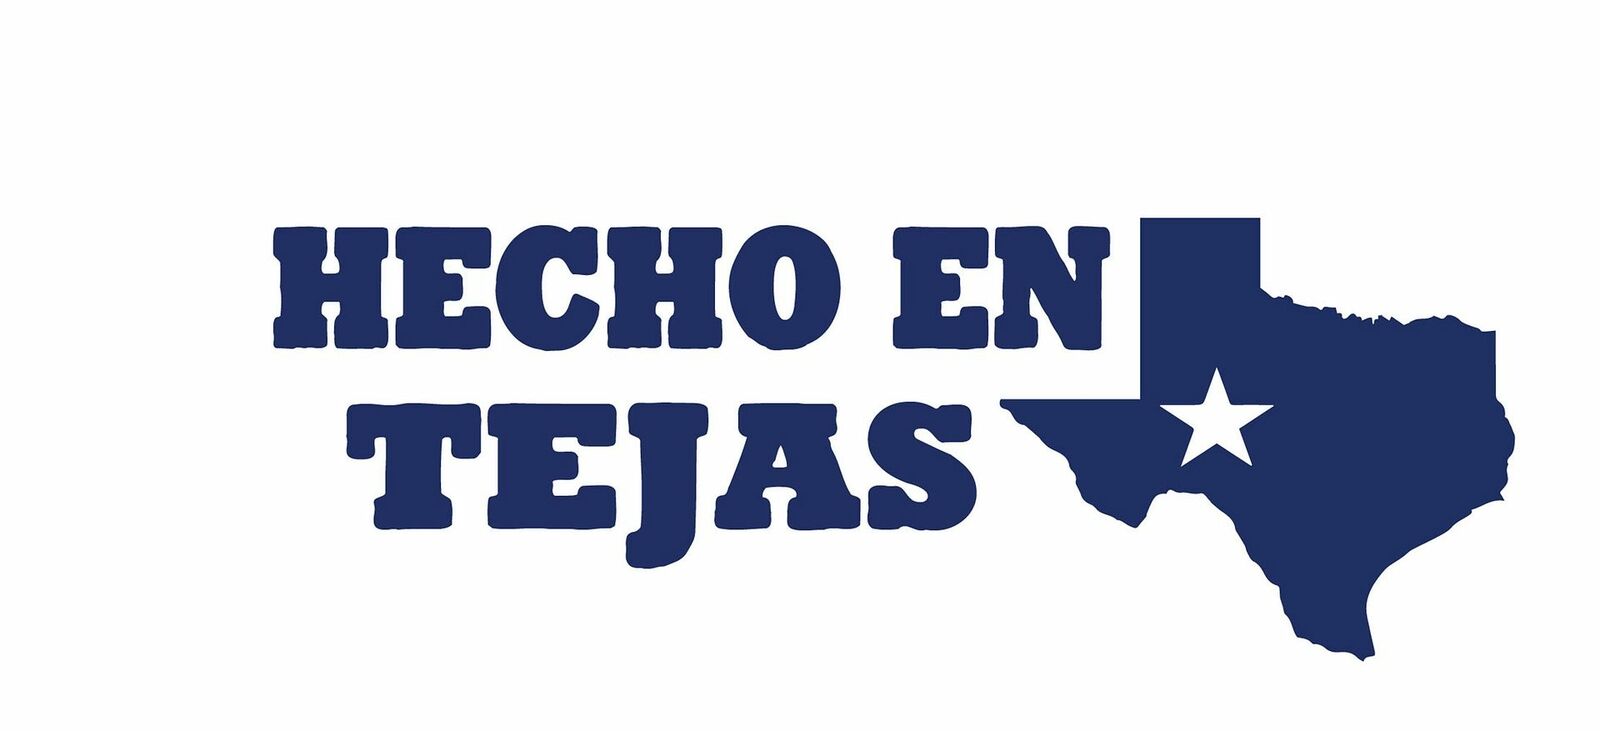 HECHO EN TEJAS Texas Decal Car Laptop Wall Sticker Decal